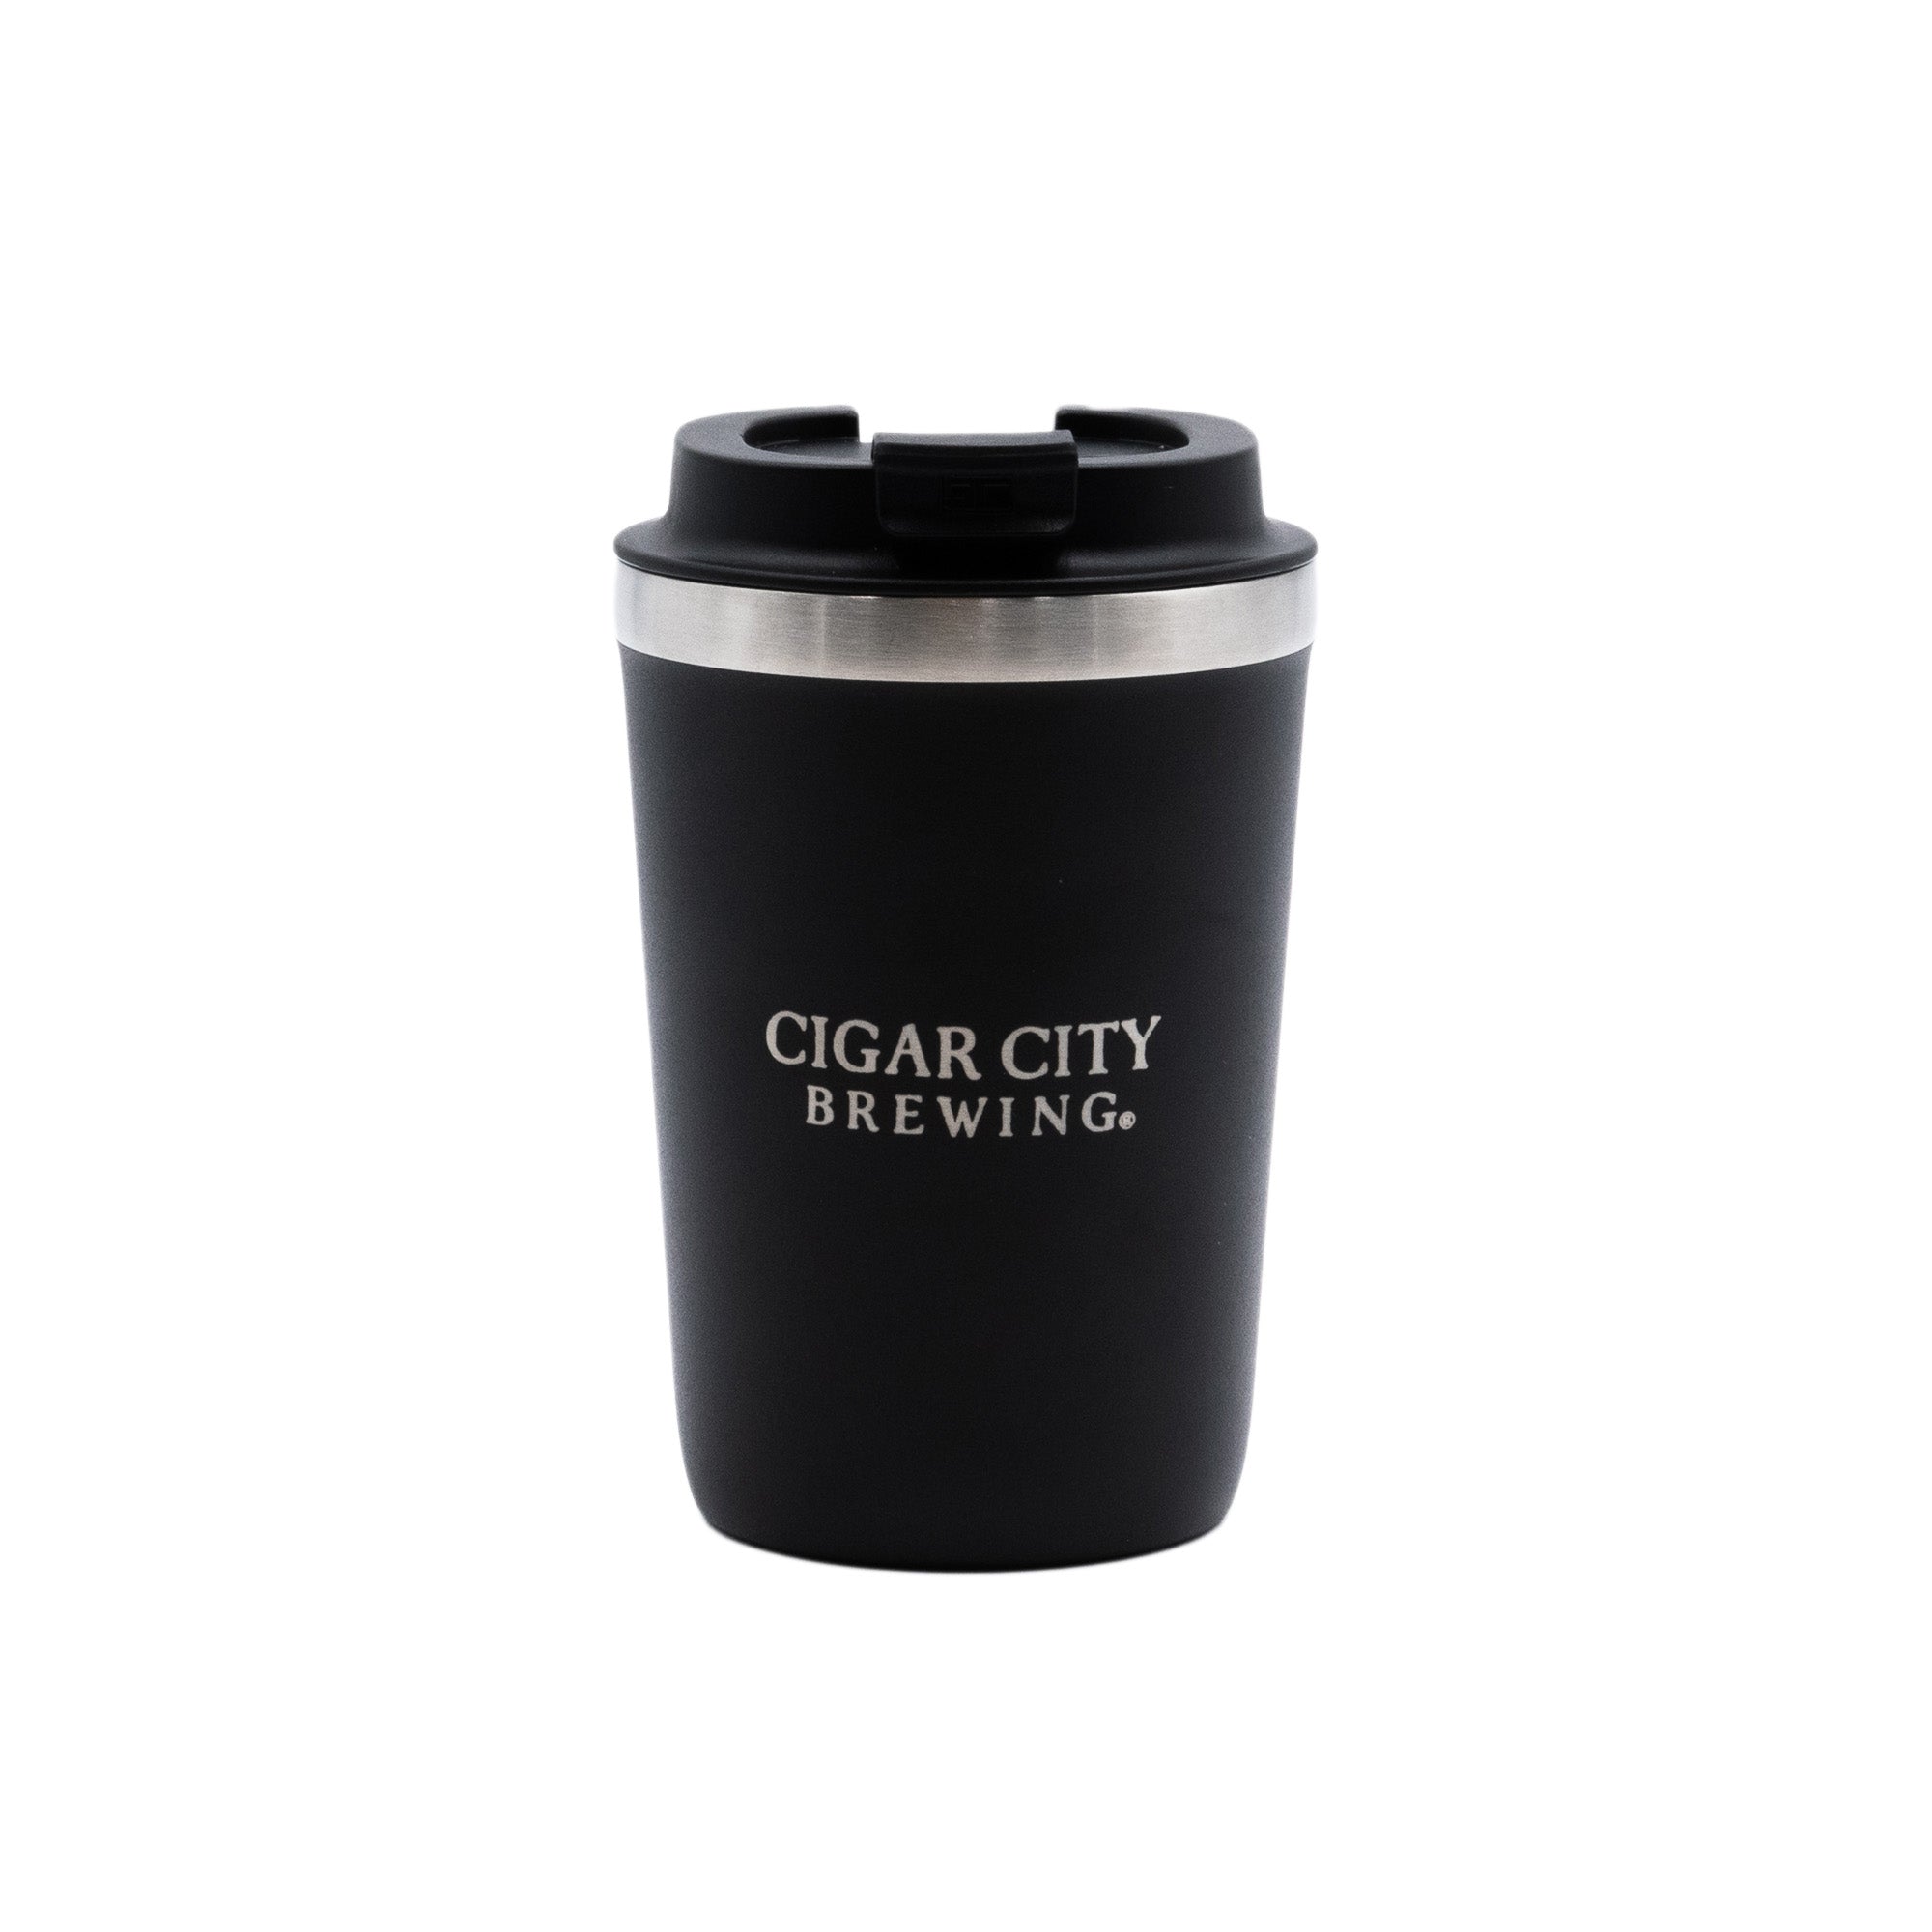 Travel Mug  Ubora Coffee